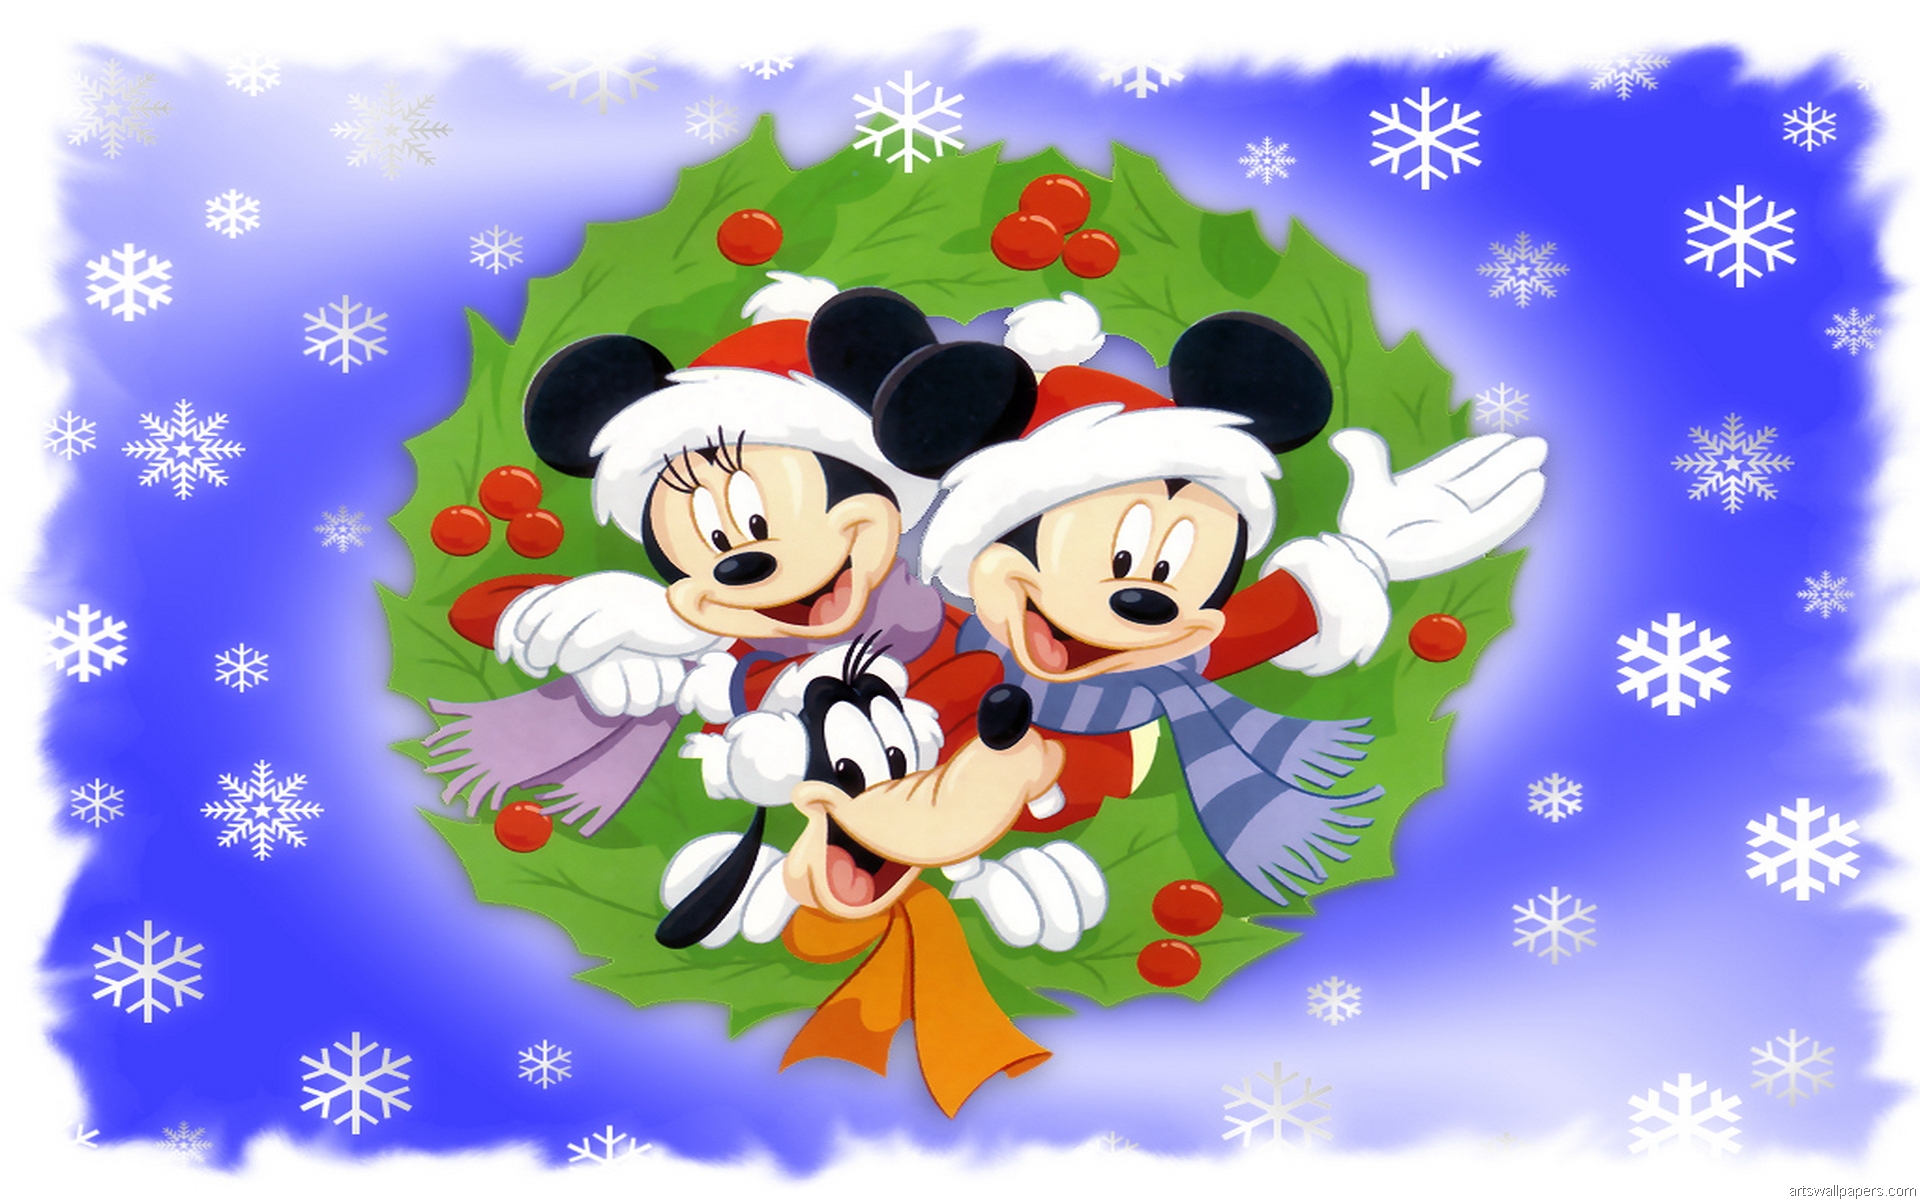 Disney Christmas Wallpaper Desktop In HD